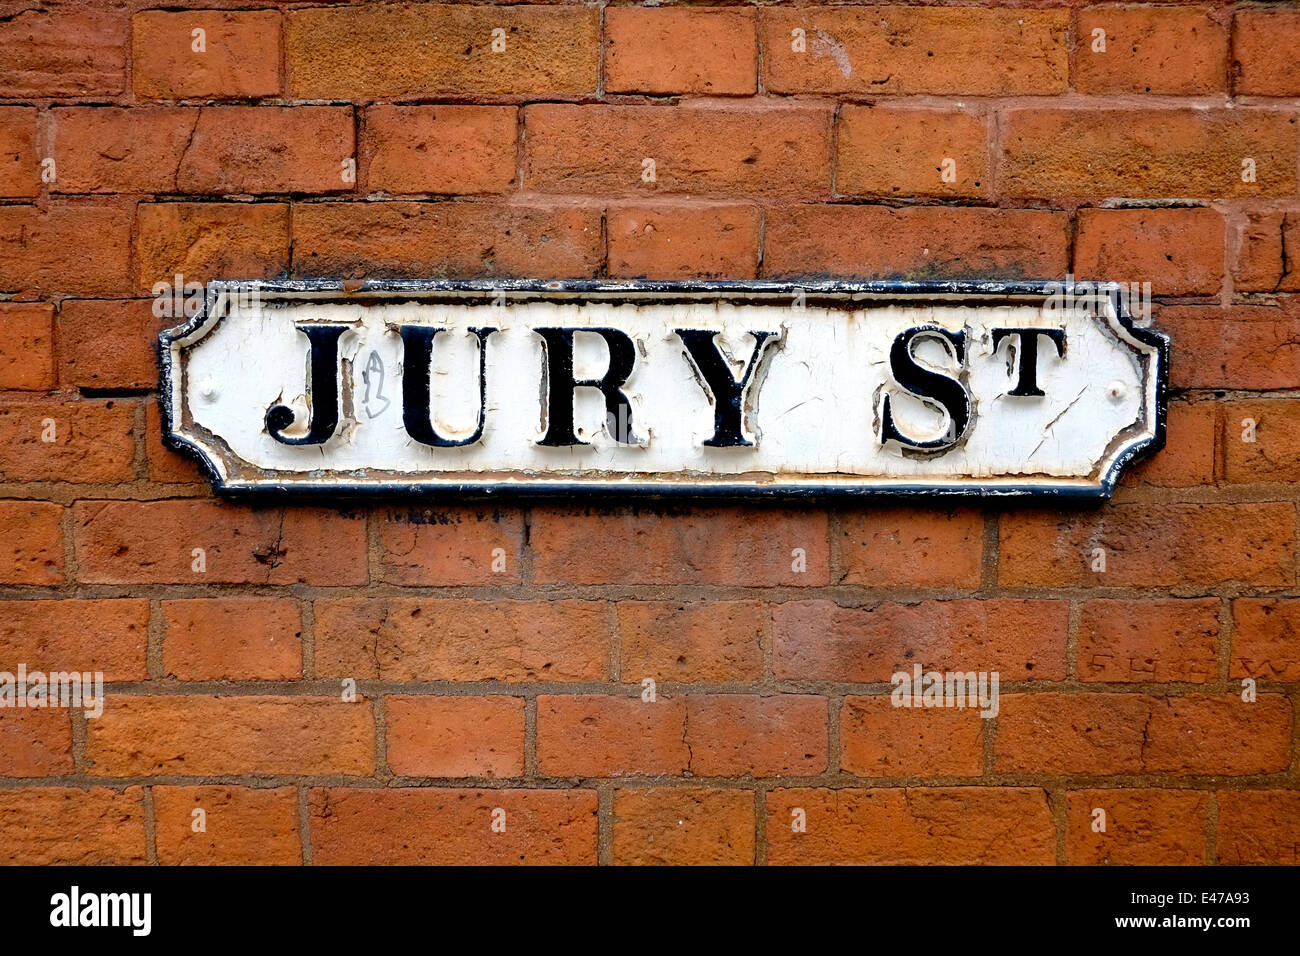 Jury street Derby England UK Stock Photo